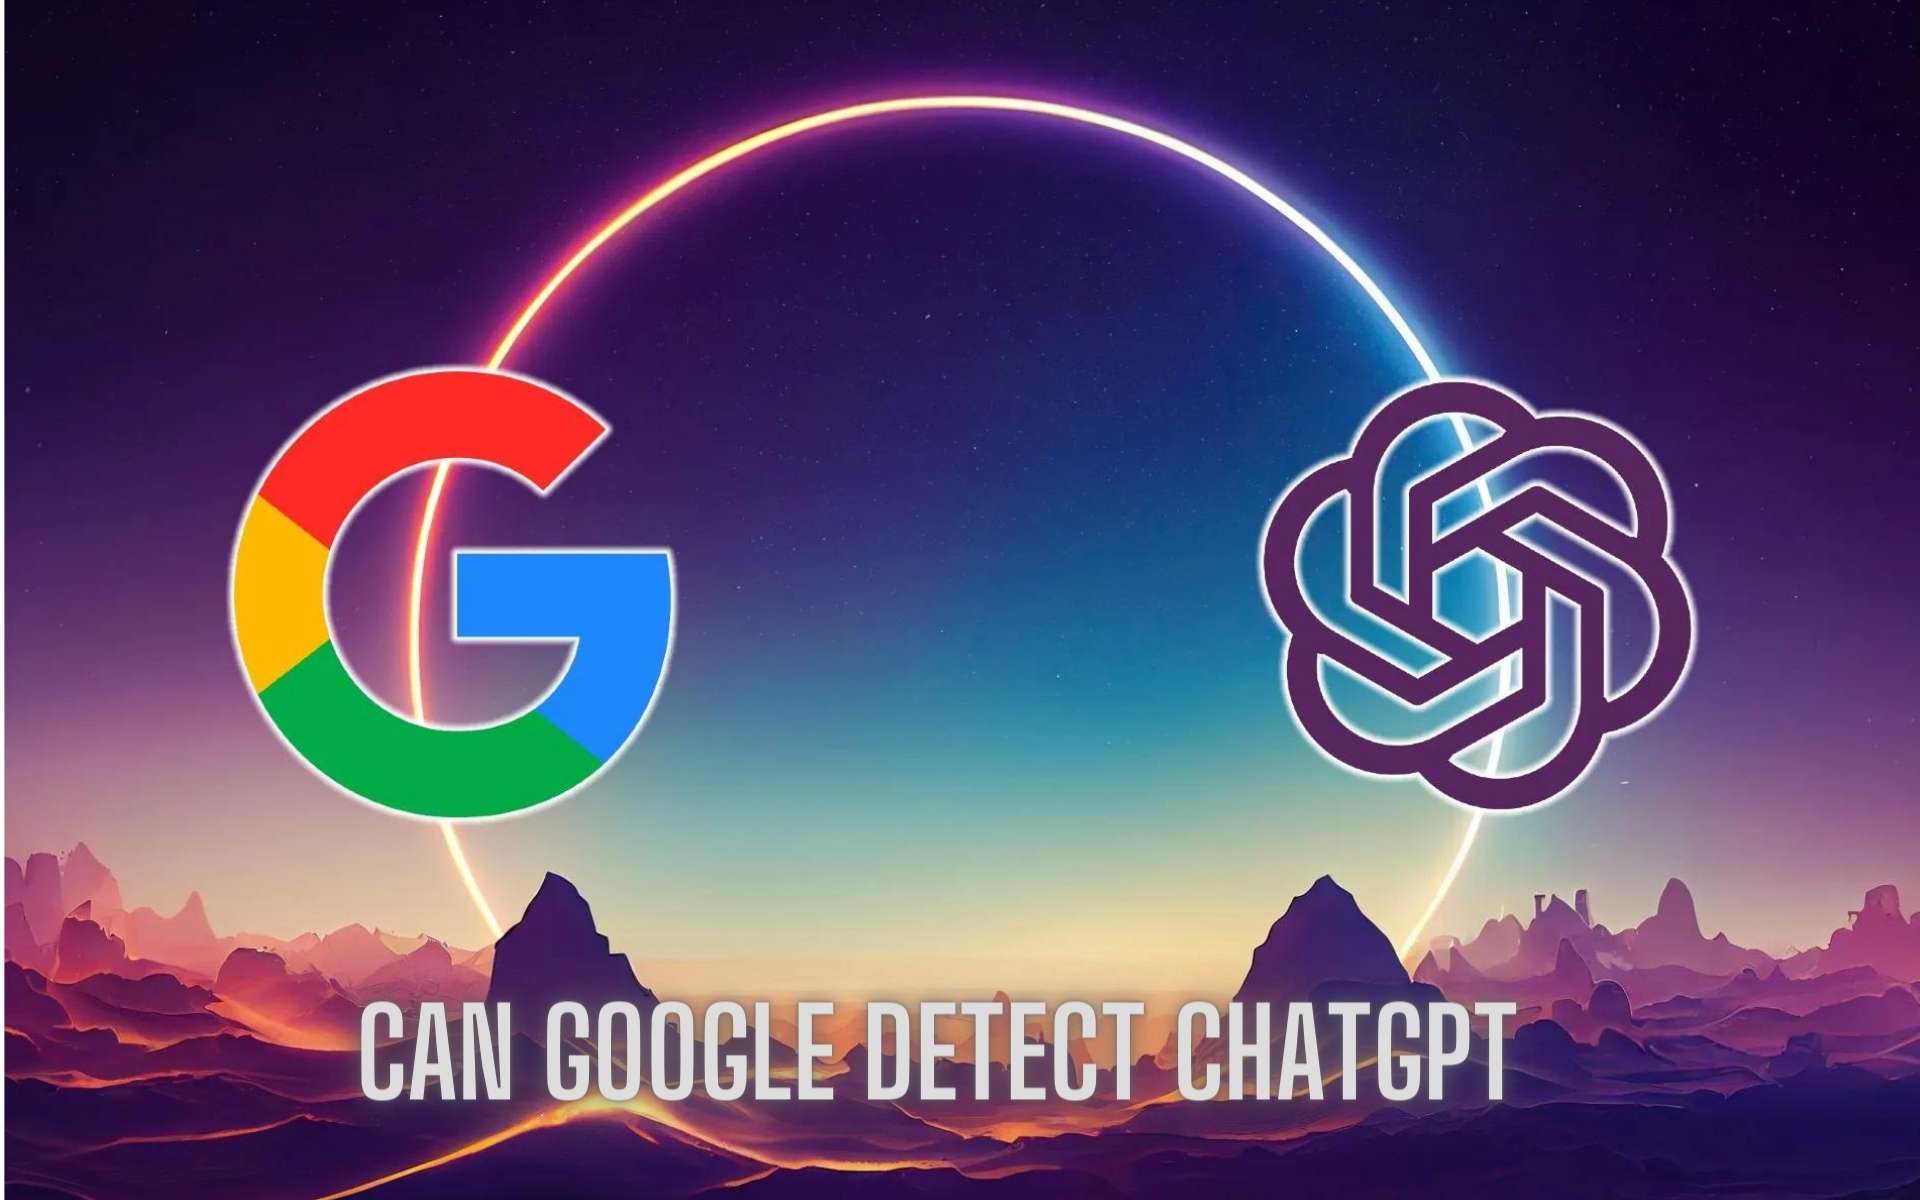 Can Google detect ChatGPT